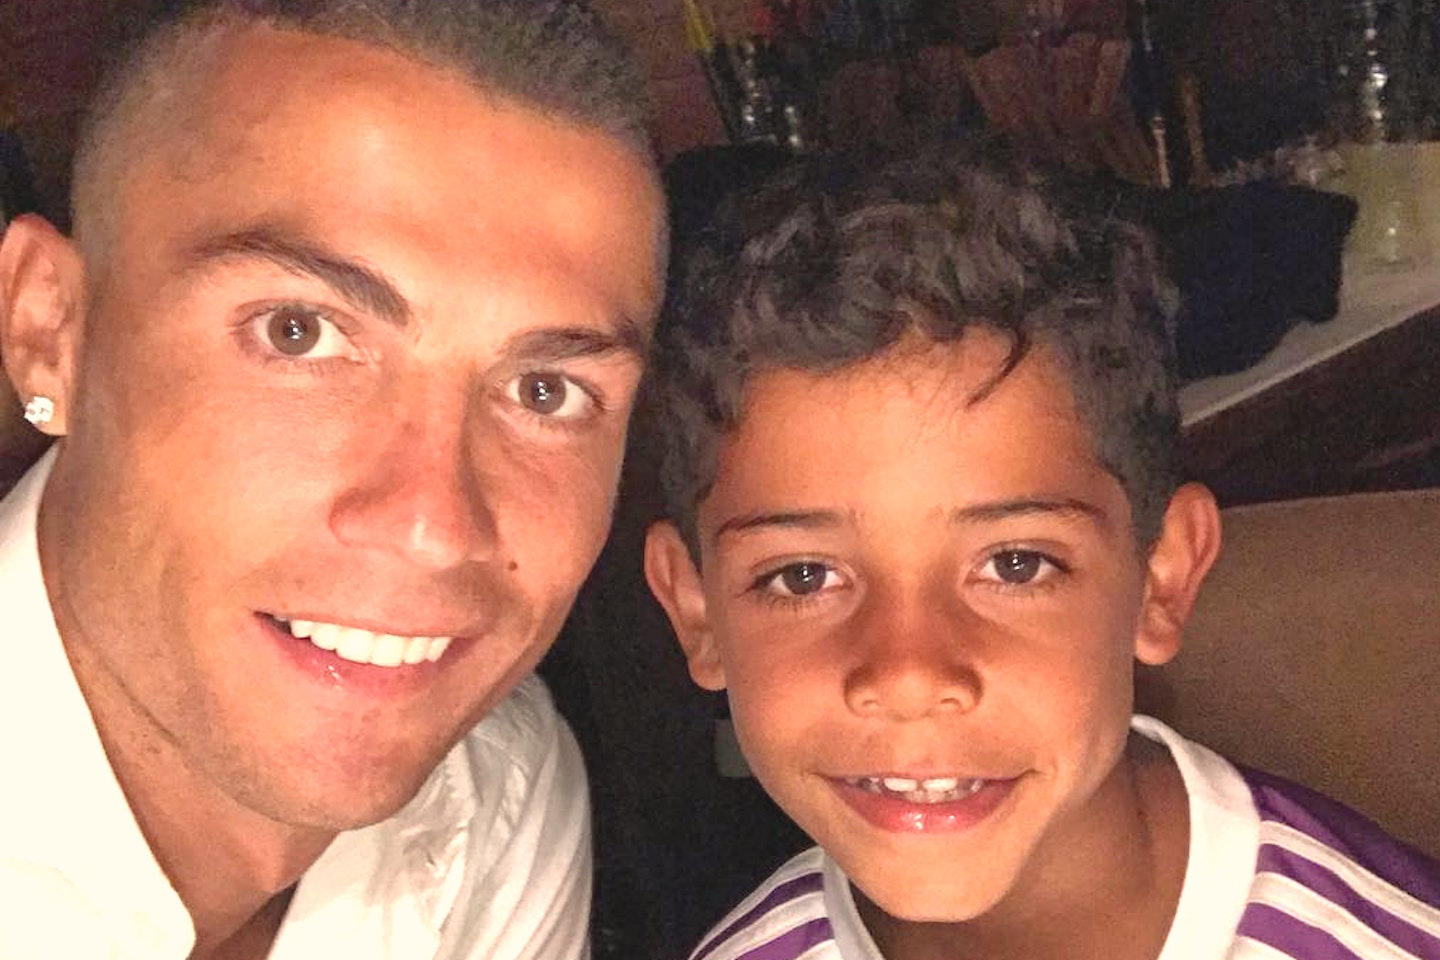 Dad-of-four Cristiano Ronaldo wants SEVEN children